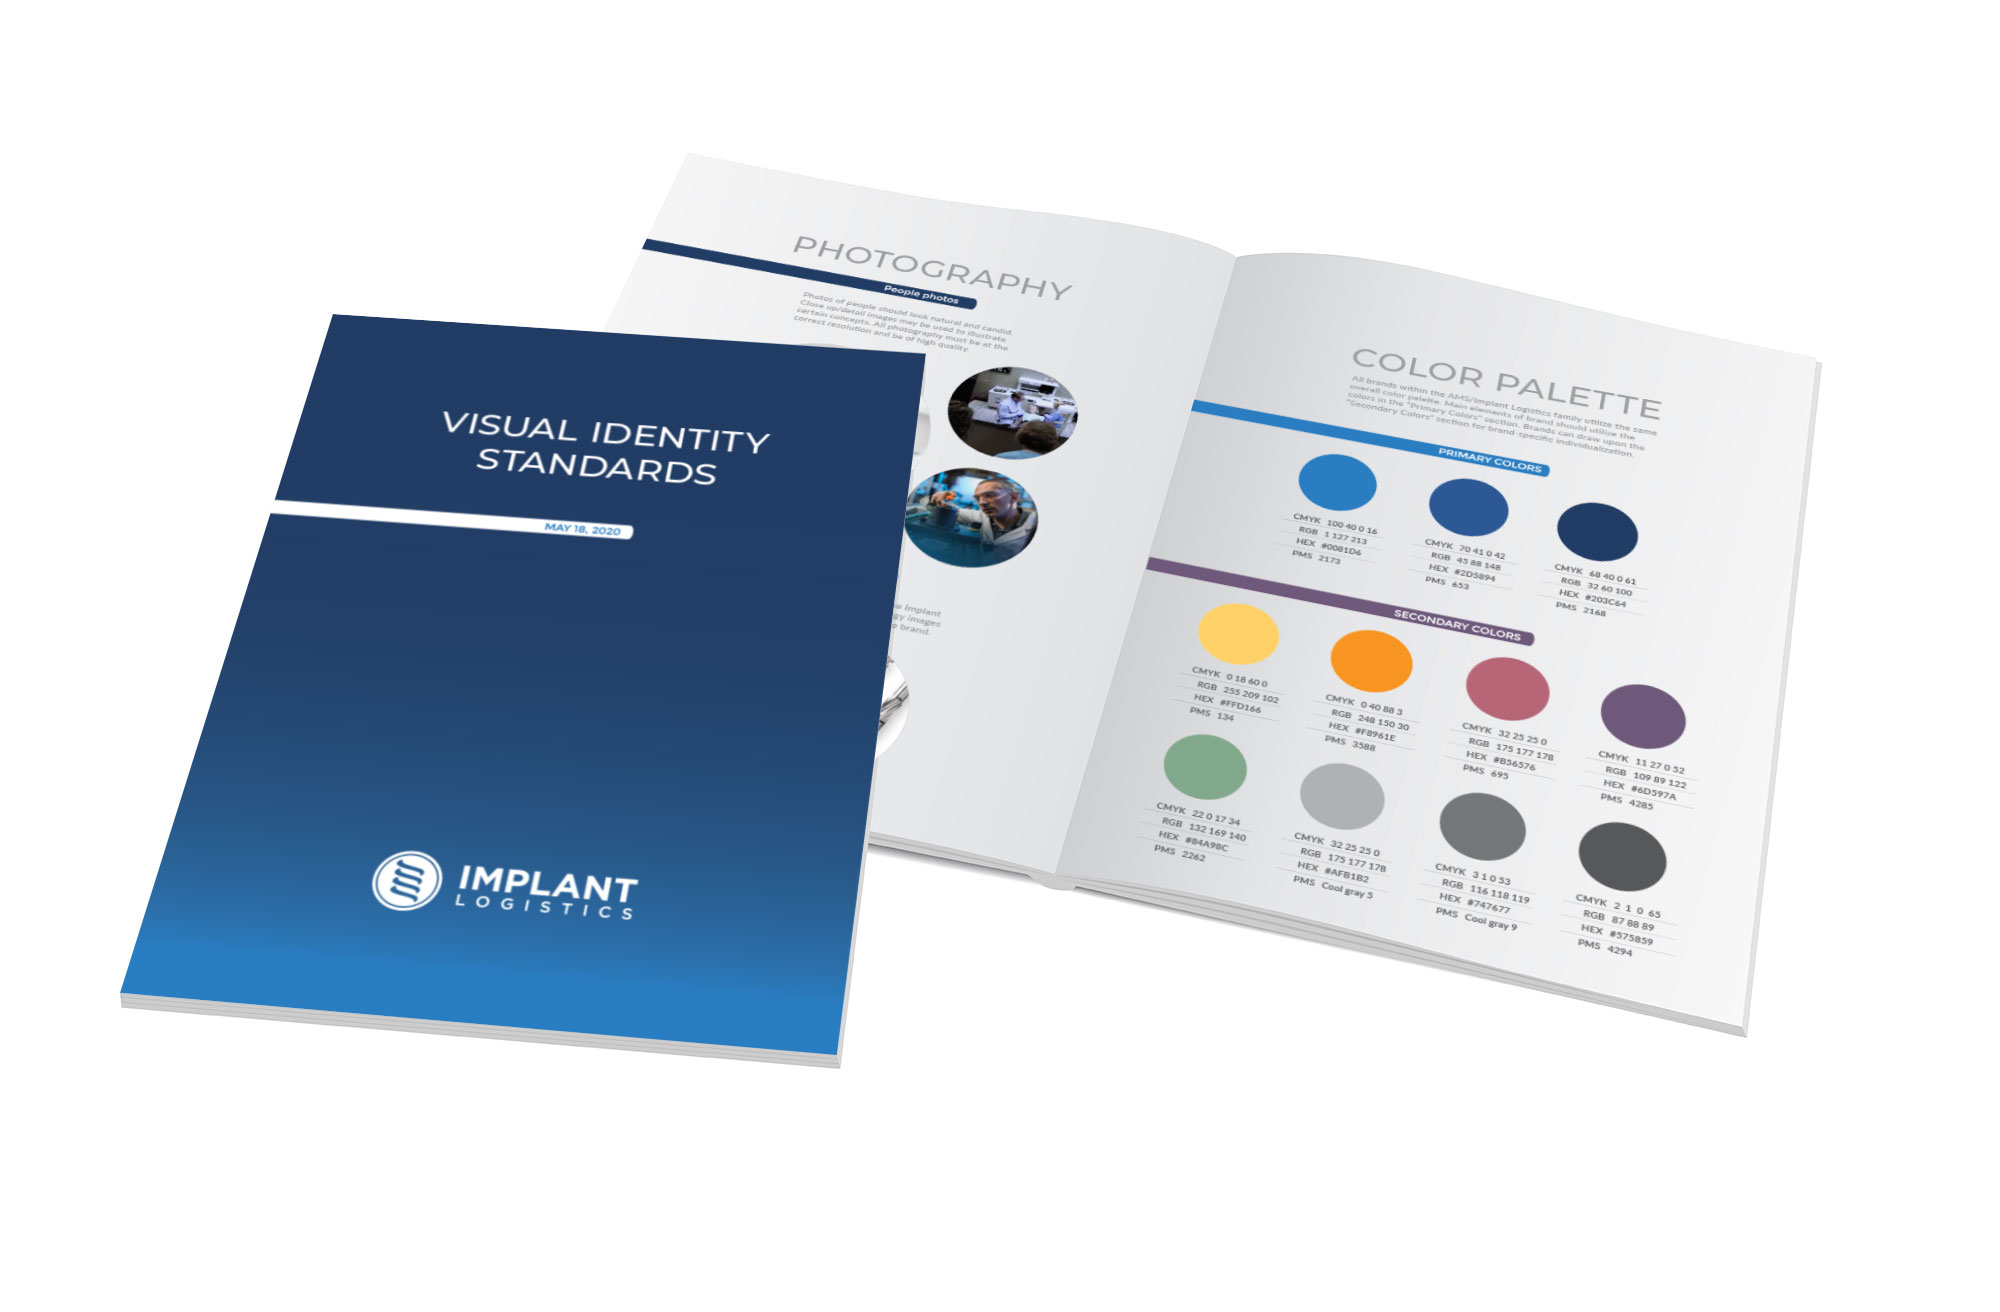 Implant Logistics visual identity standards guide